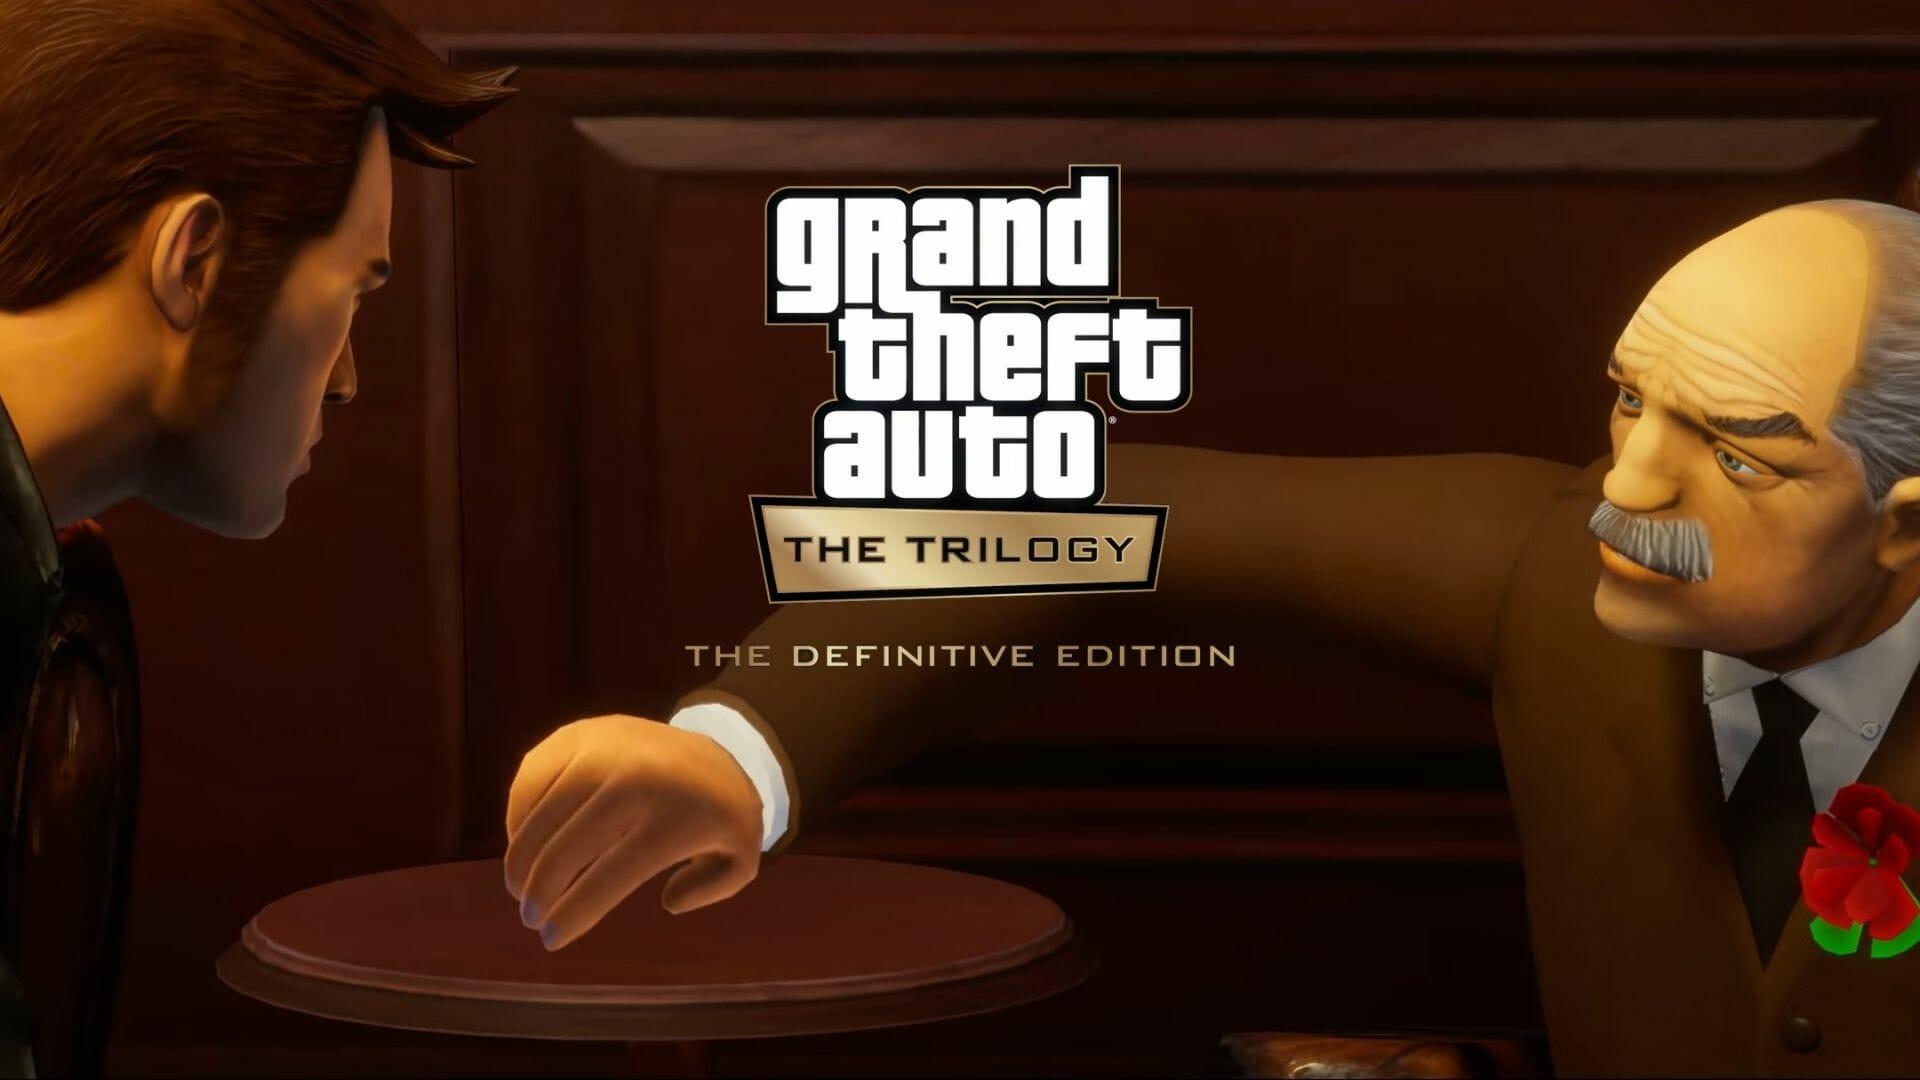 Grand Theft Auto III - The Definitive Edition - Rockstar Games